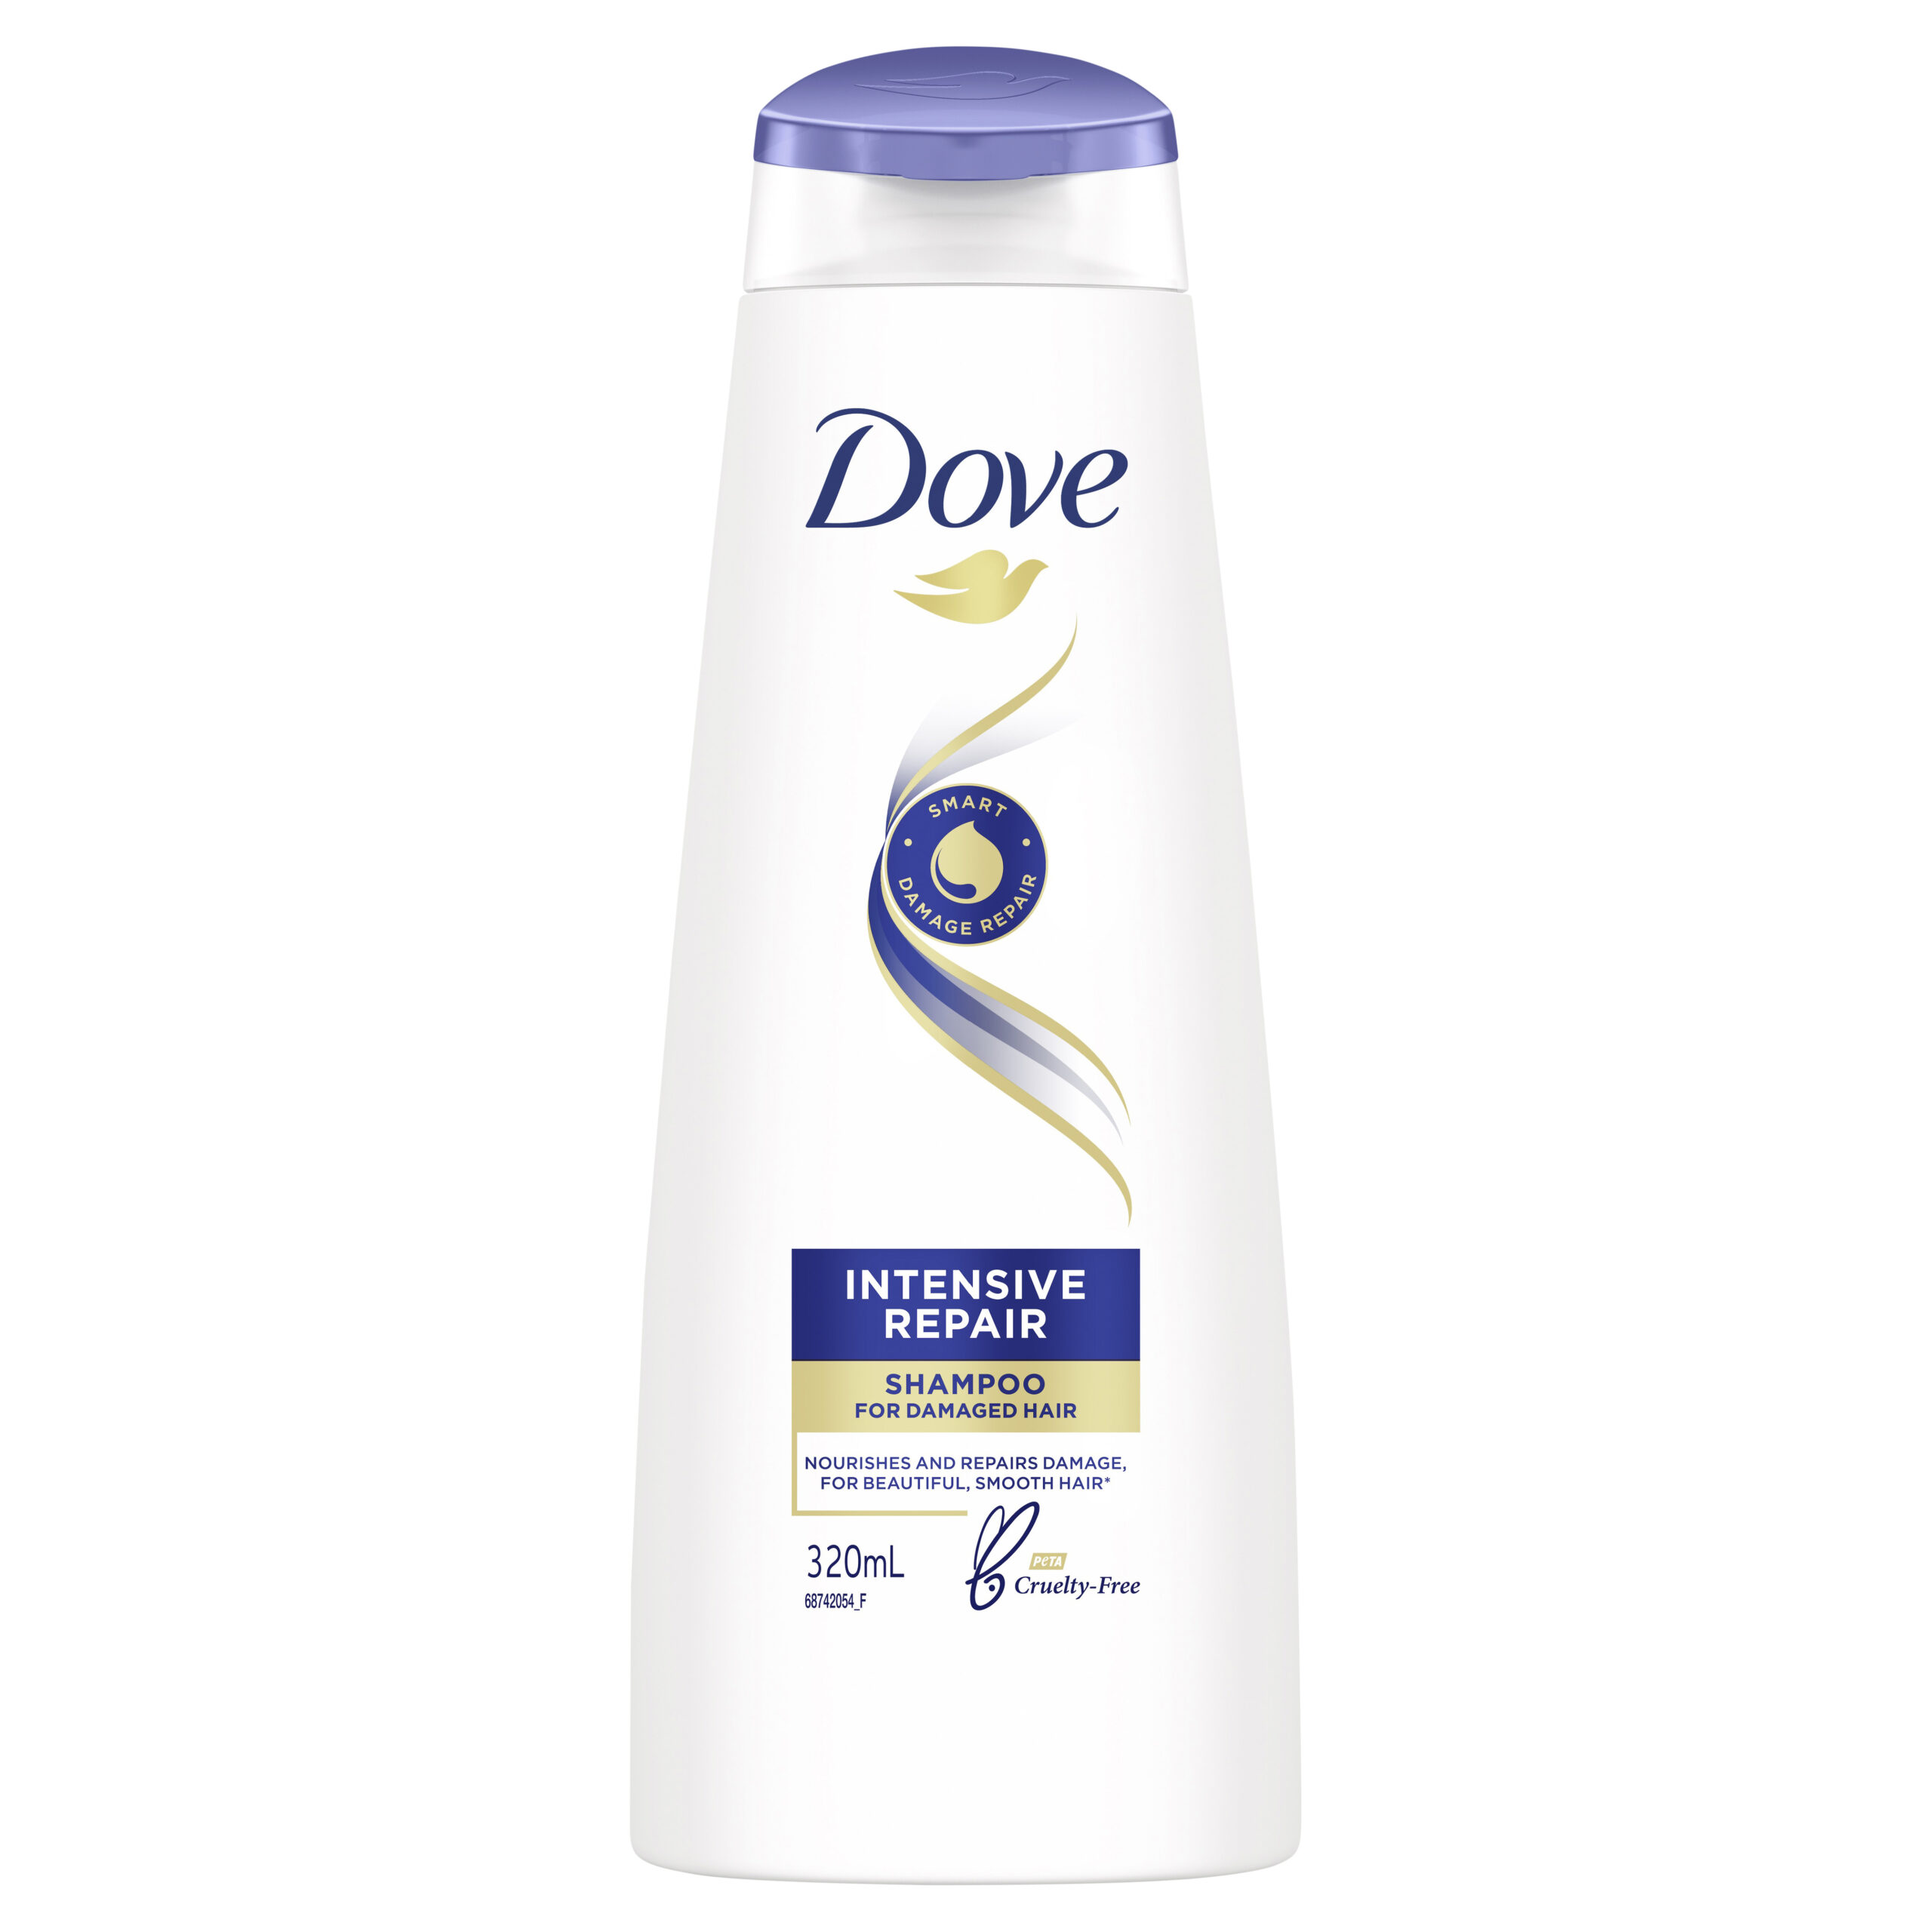 Dove Intensive Repair Shampoo for Damaged Hair Reviews - beautyheaven